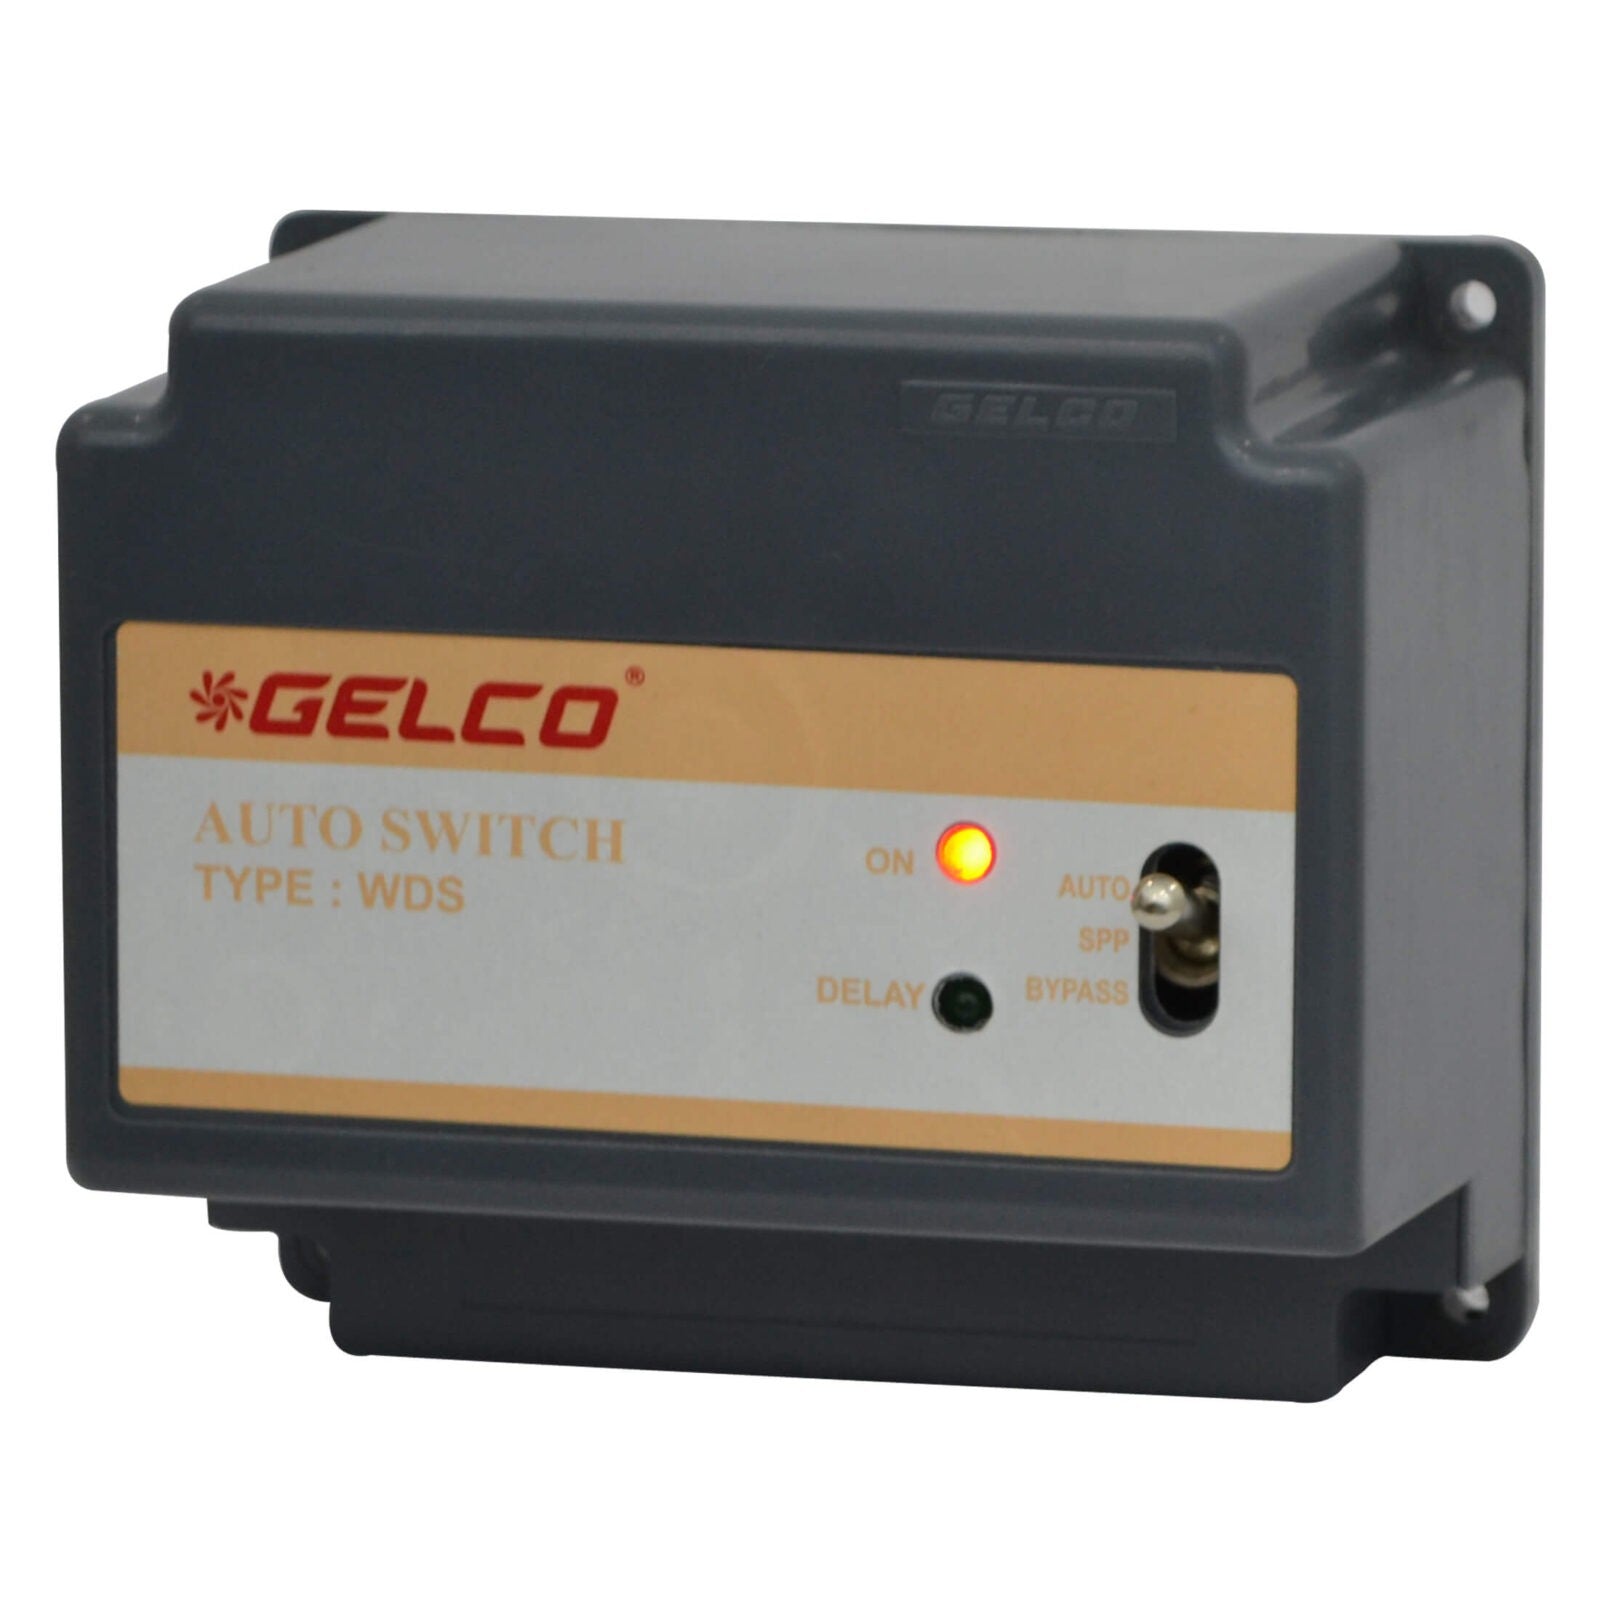 Auto Switch - Gelco Electronics Pvt. Ltd.